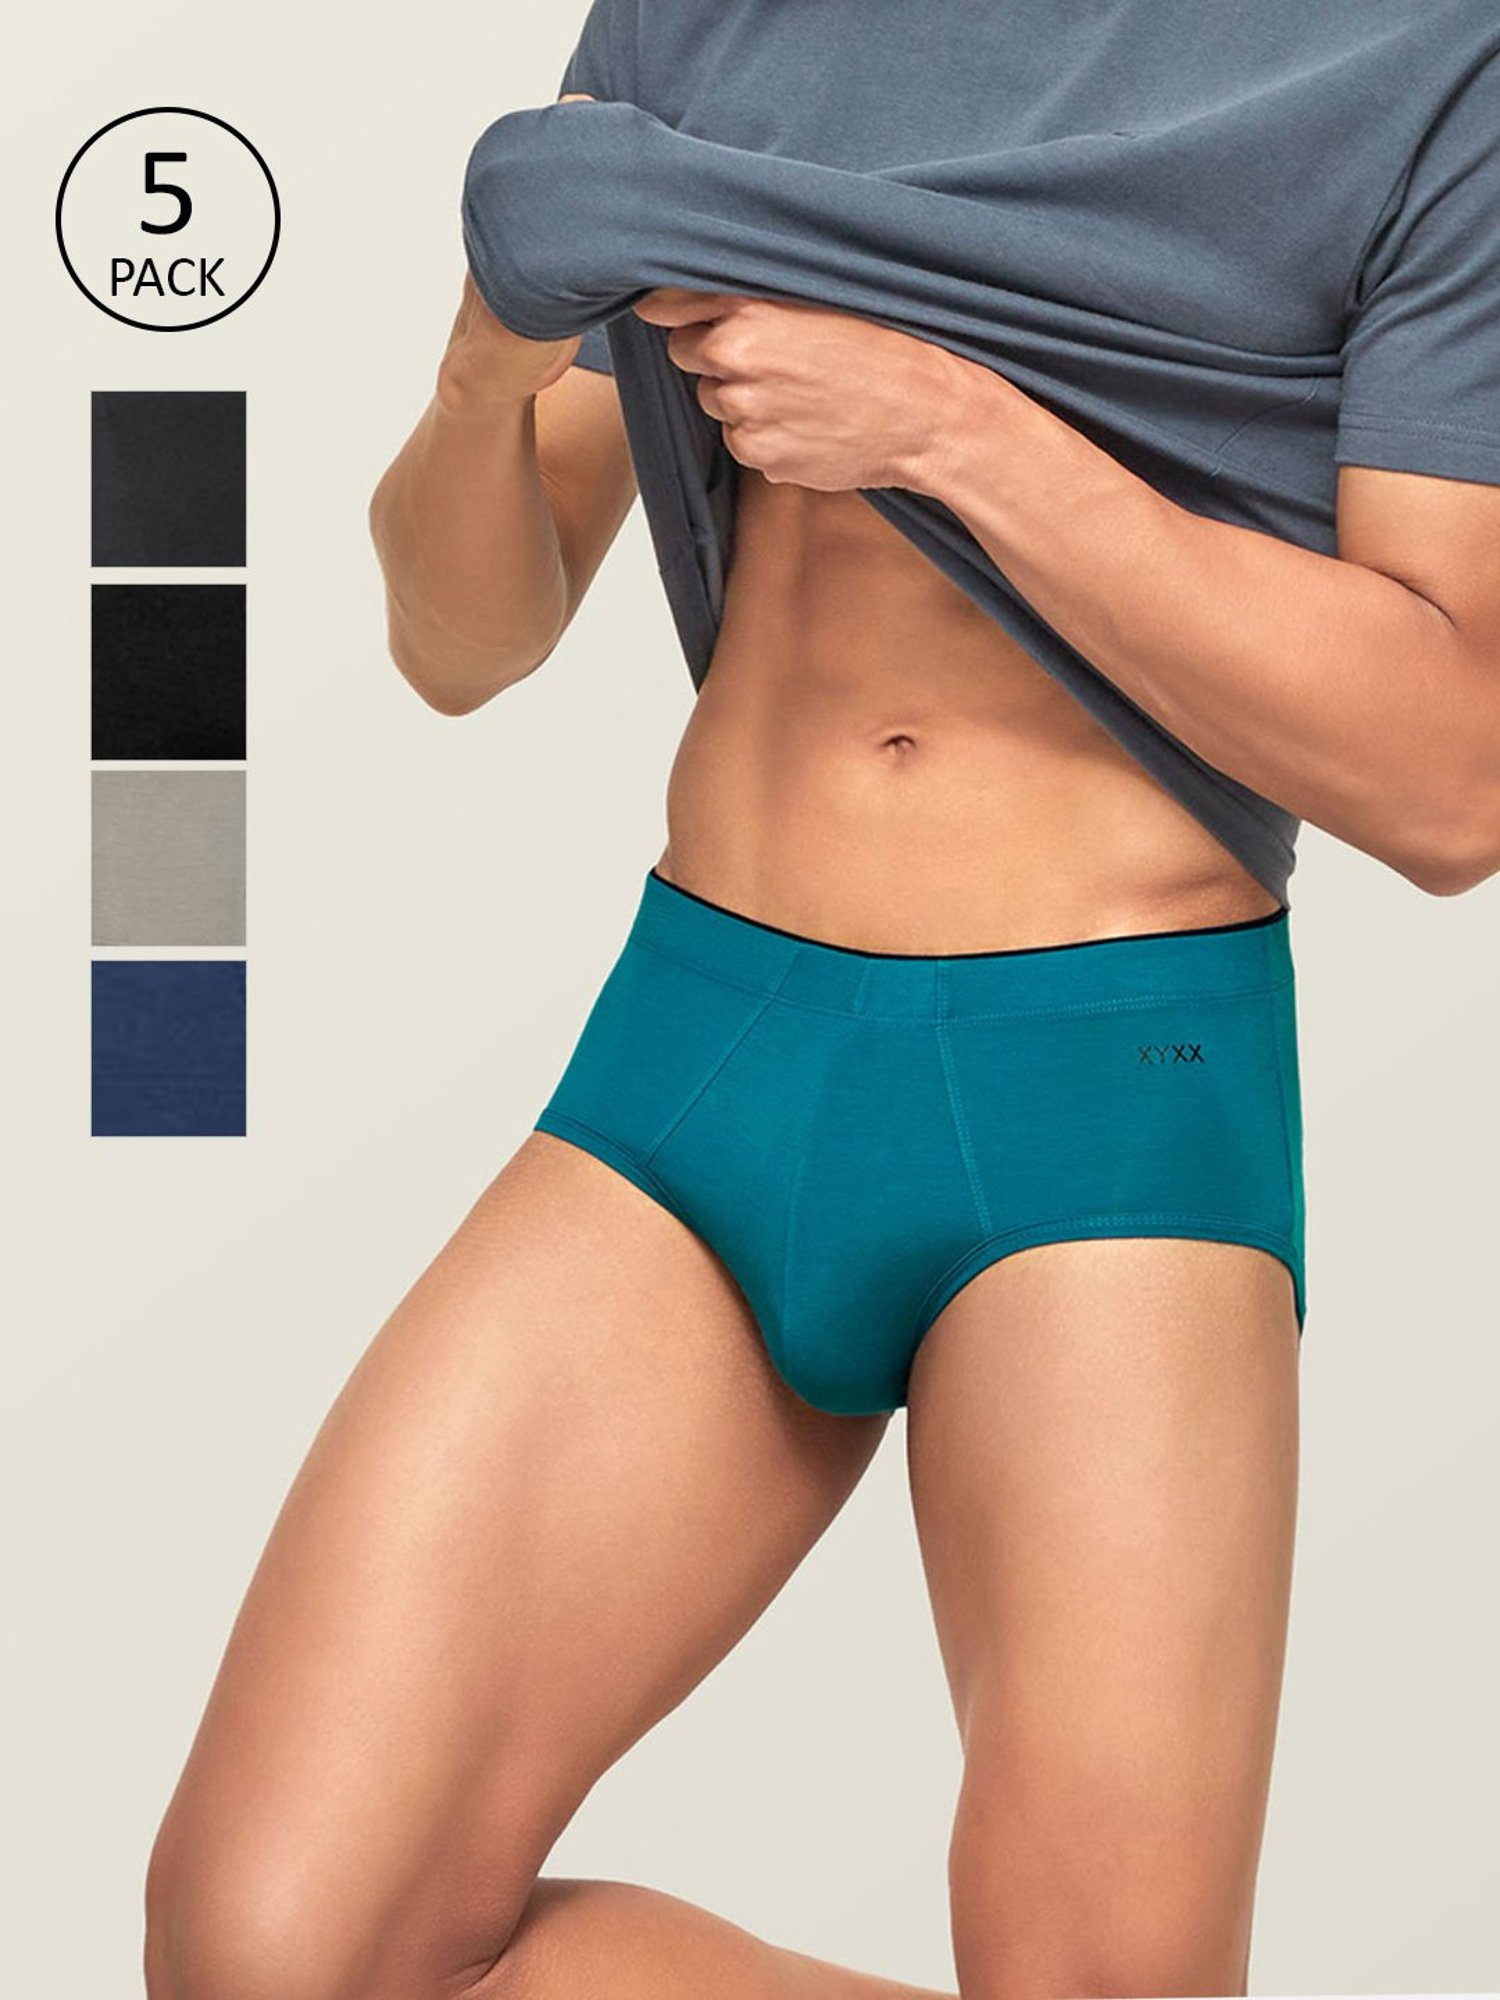 Buy XYXX Multicolor Snug Fit Briefs - Pack of 5 for Men's Online @ Tata CLiQ